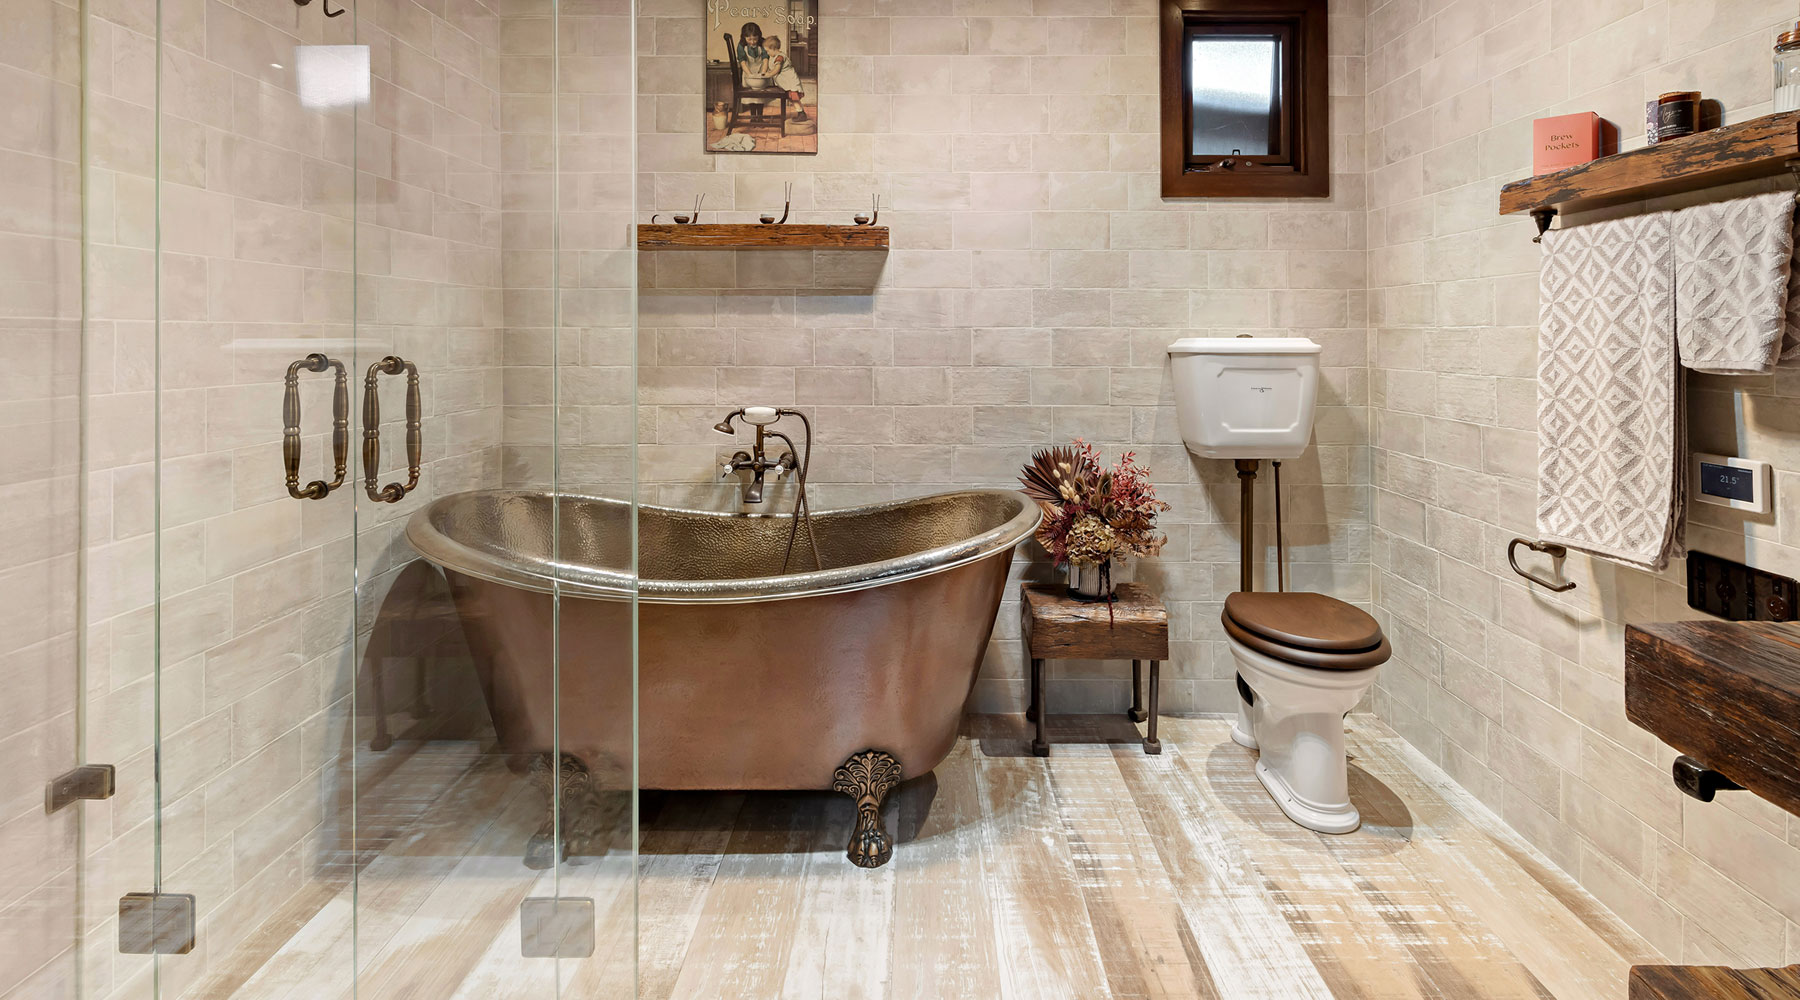 Modern tiled bathroom with freestanding bath tub